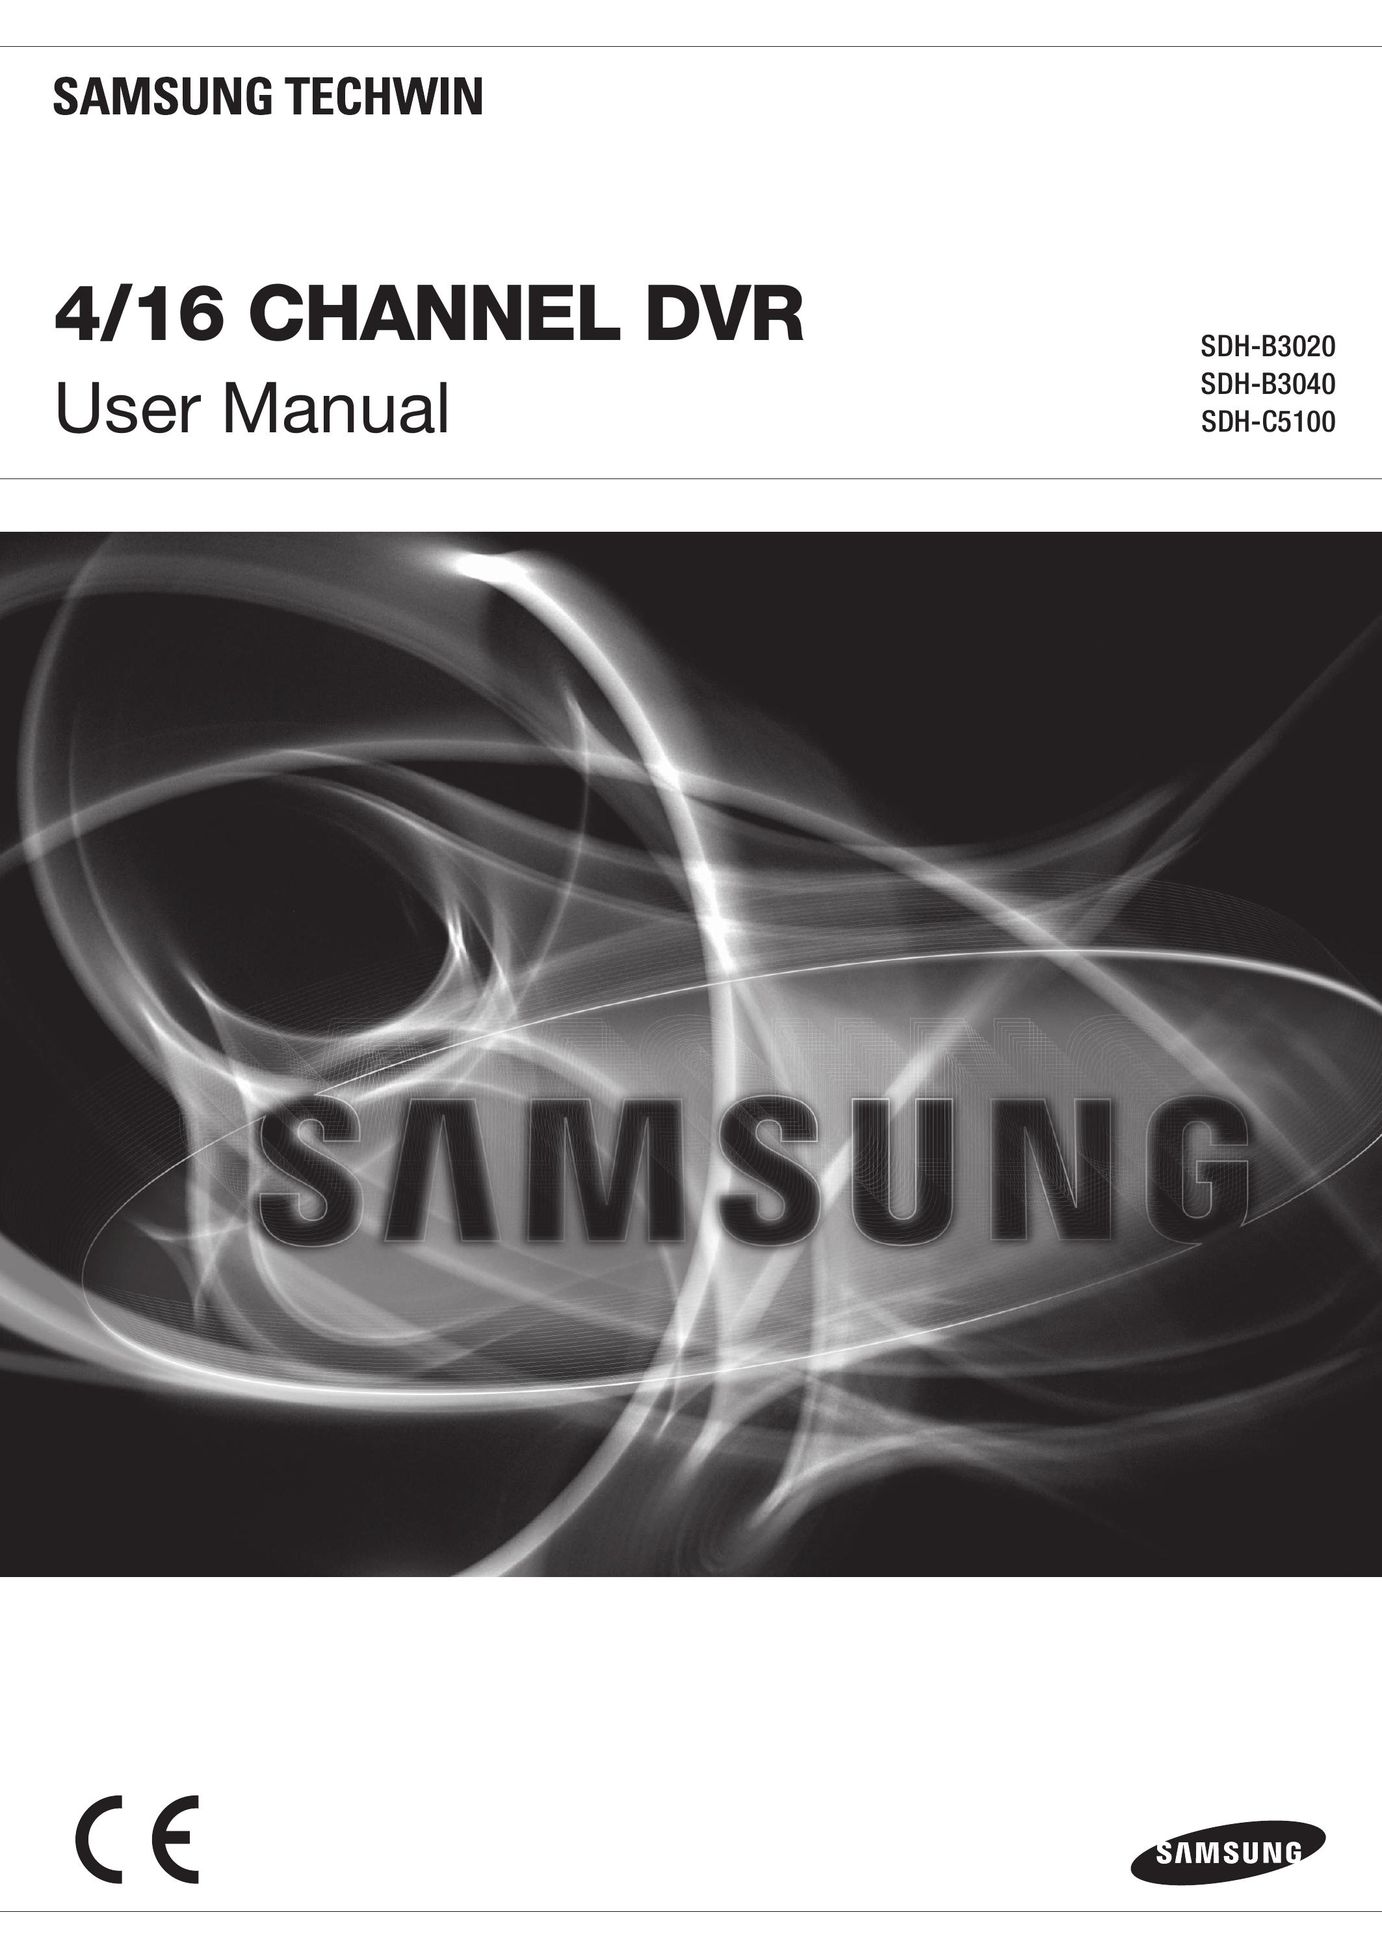 Samsung SDH-C5100 DVR User Manual